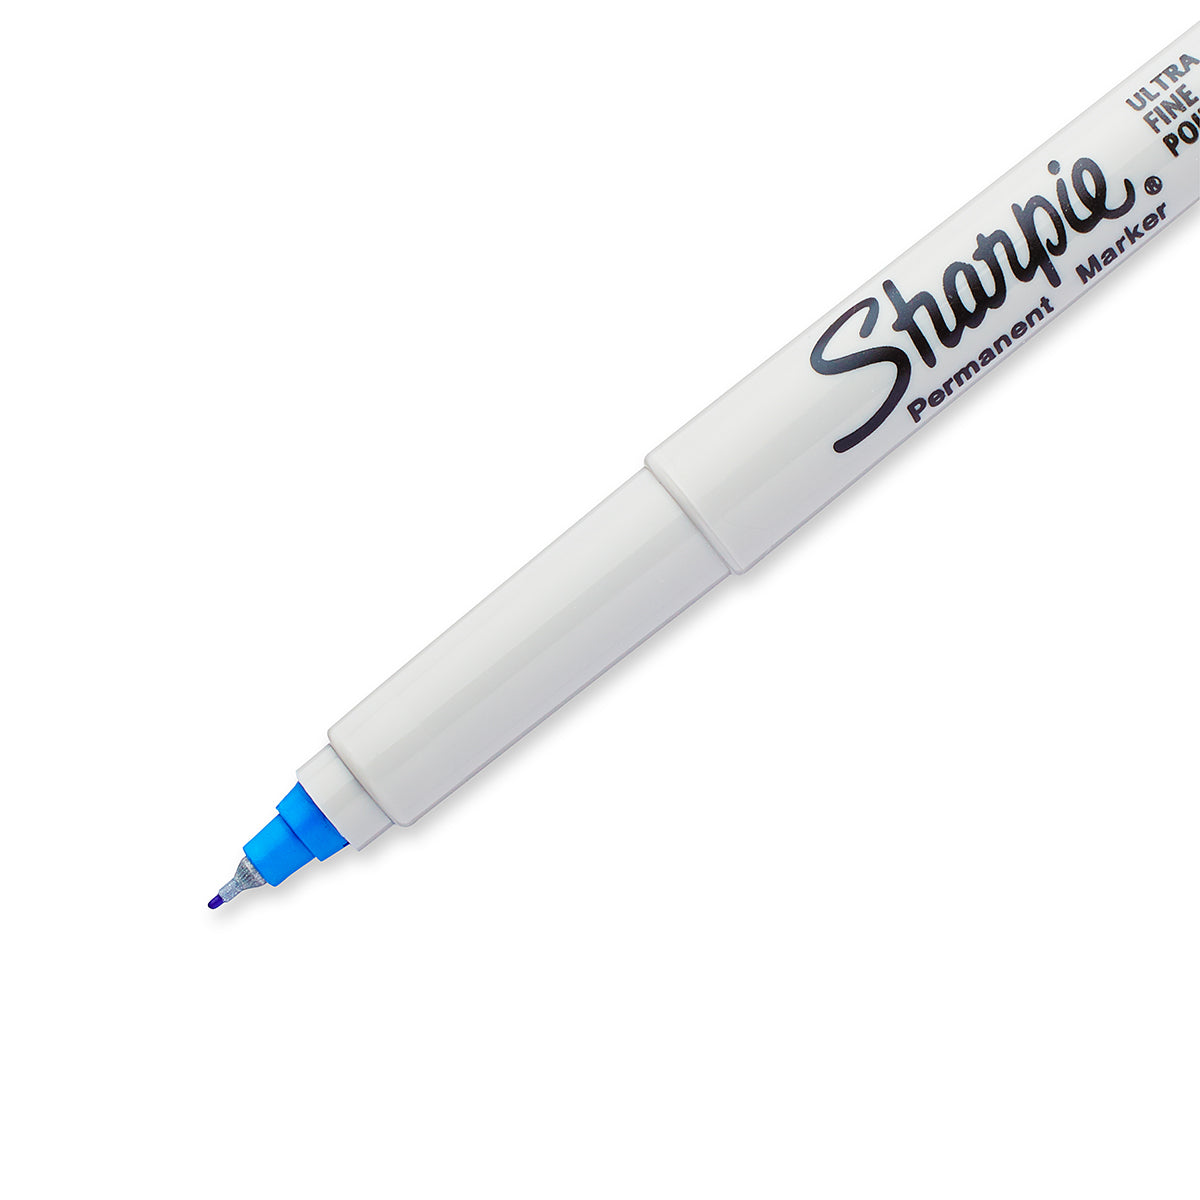 Sharpie Electro Pop Permanent Marker - Ultra Fine Point - Ultra